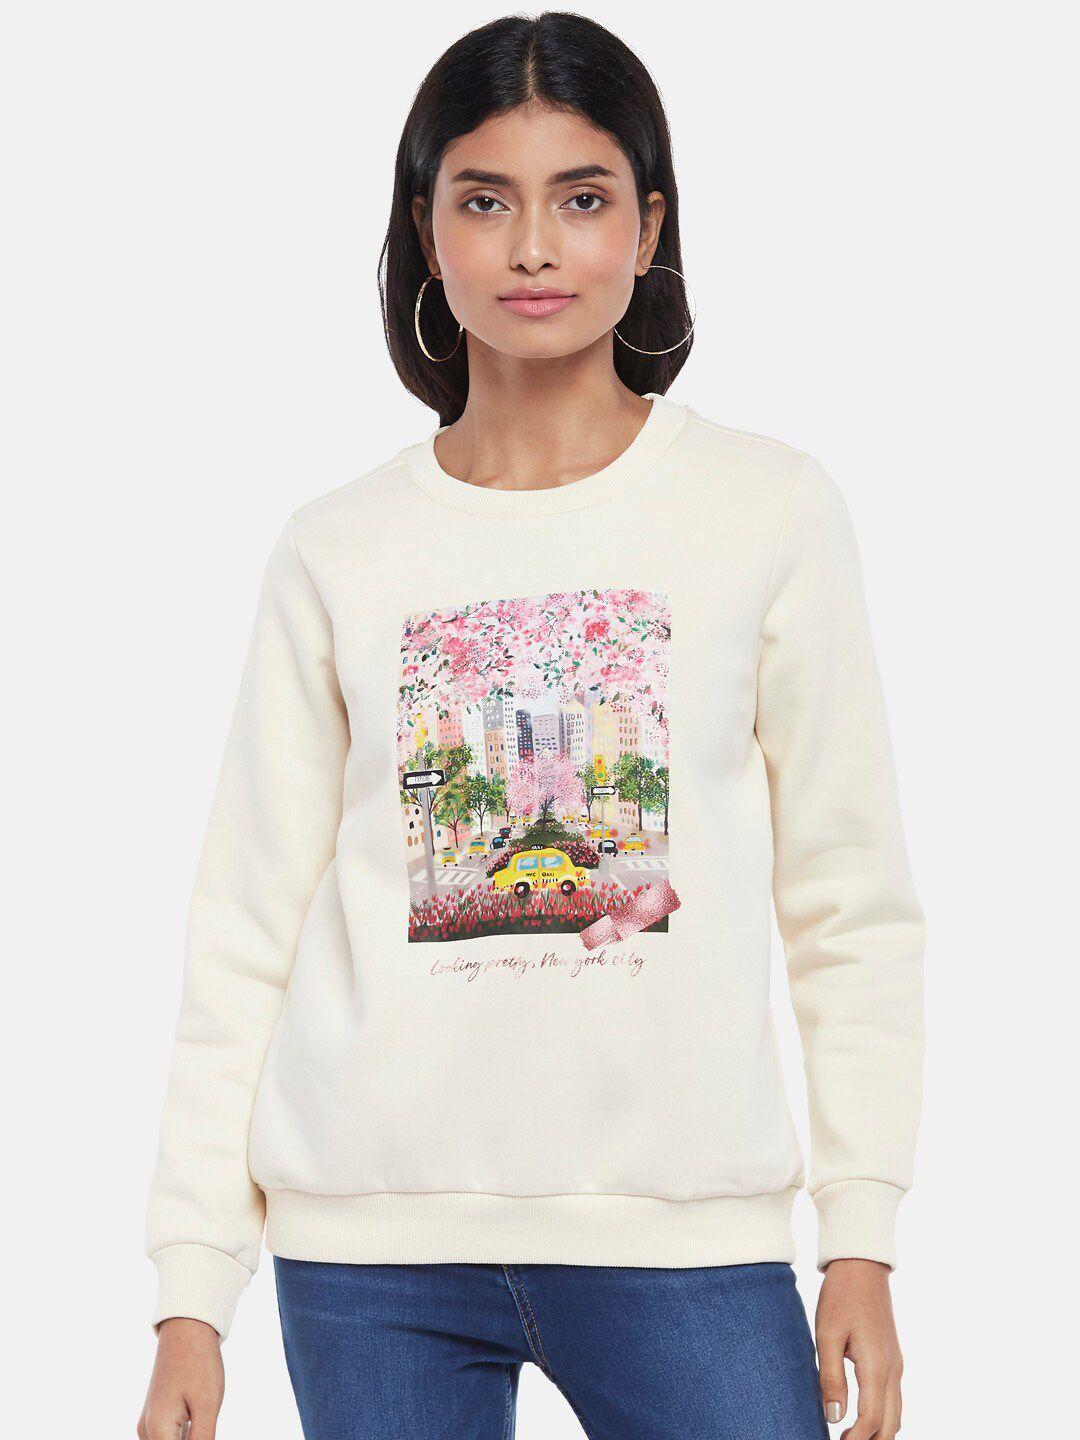 honey by pantaloons women printed sweatshirt